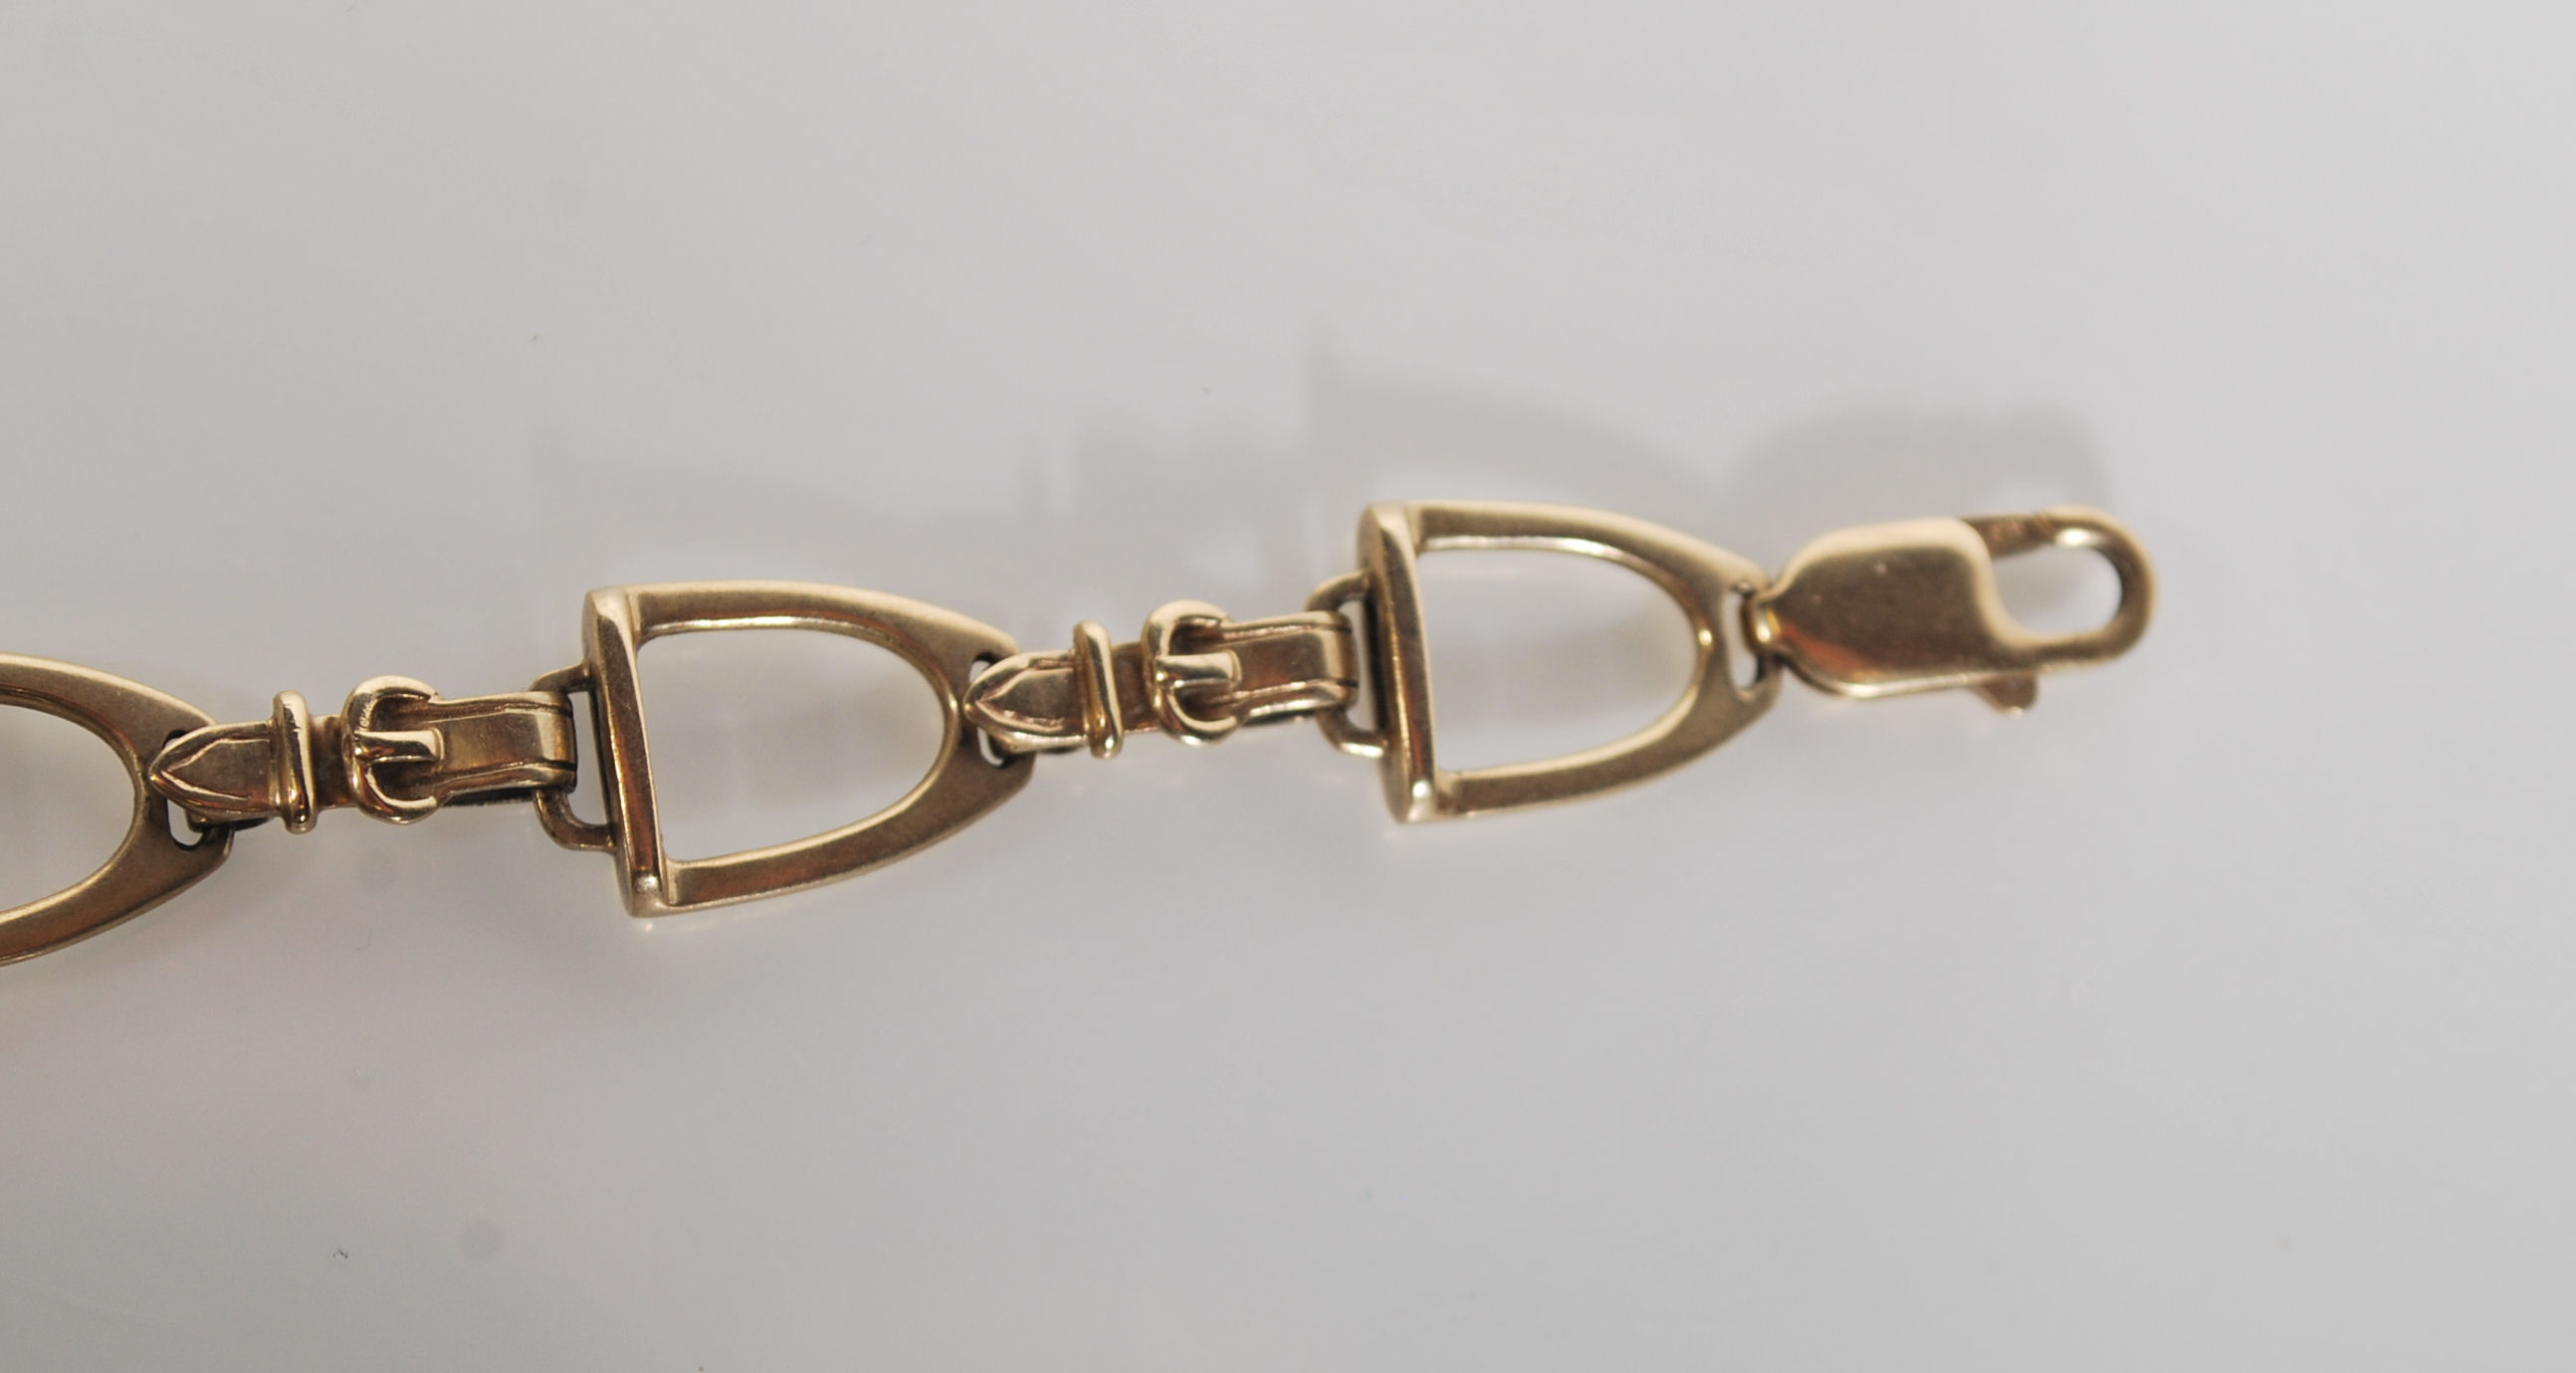 A 9ct Gold hallmarked designer bracelet by Rosemary Hetherington, the bracelet designed as Horse - Image 4 of 6